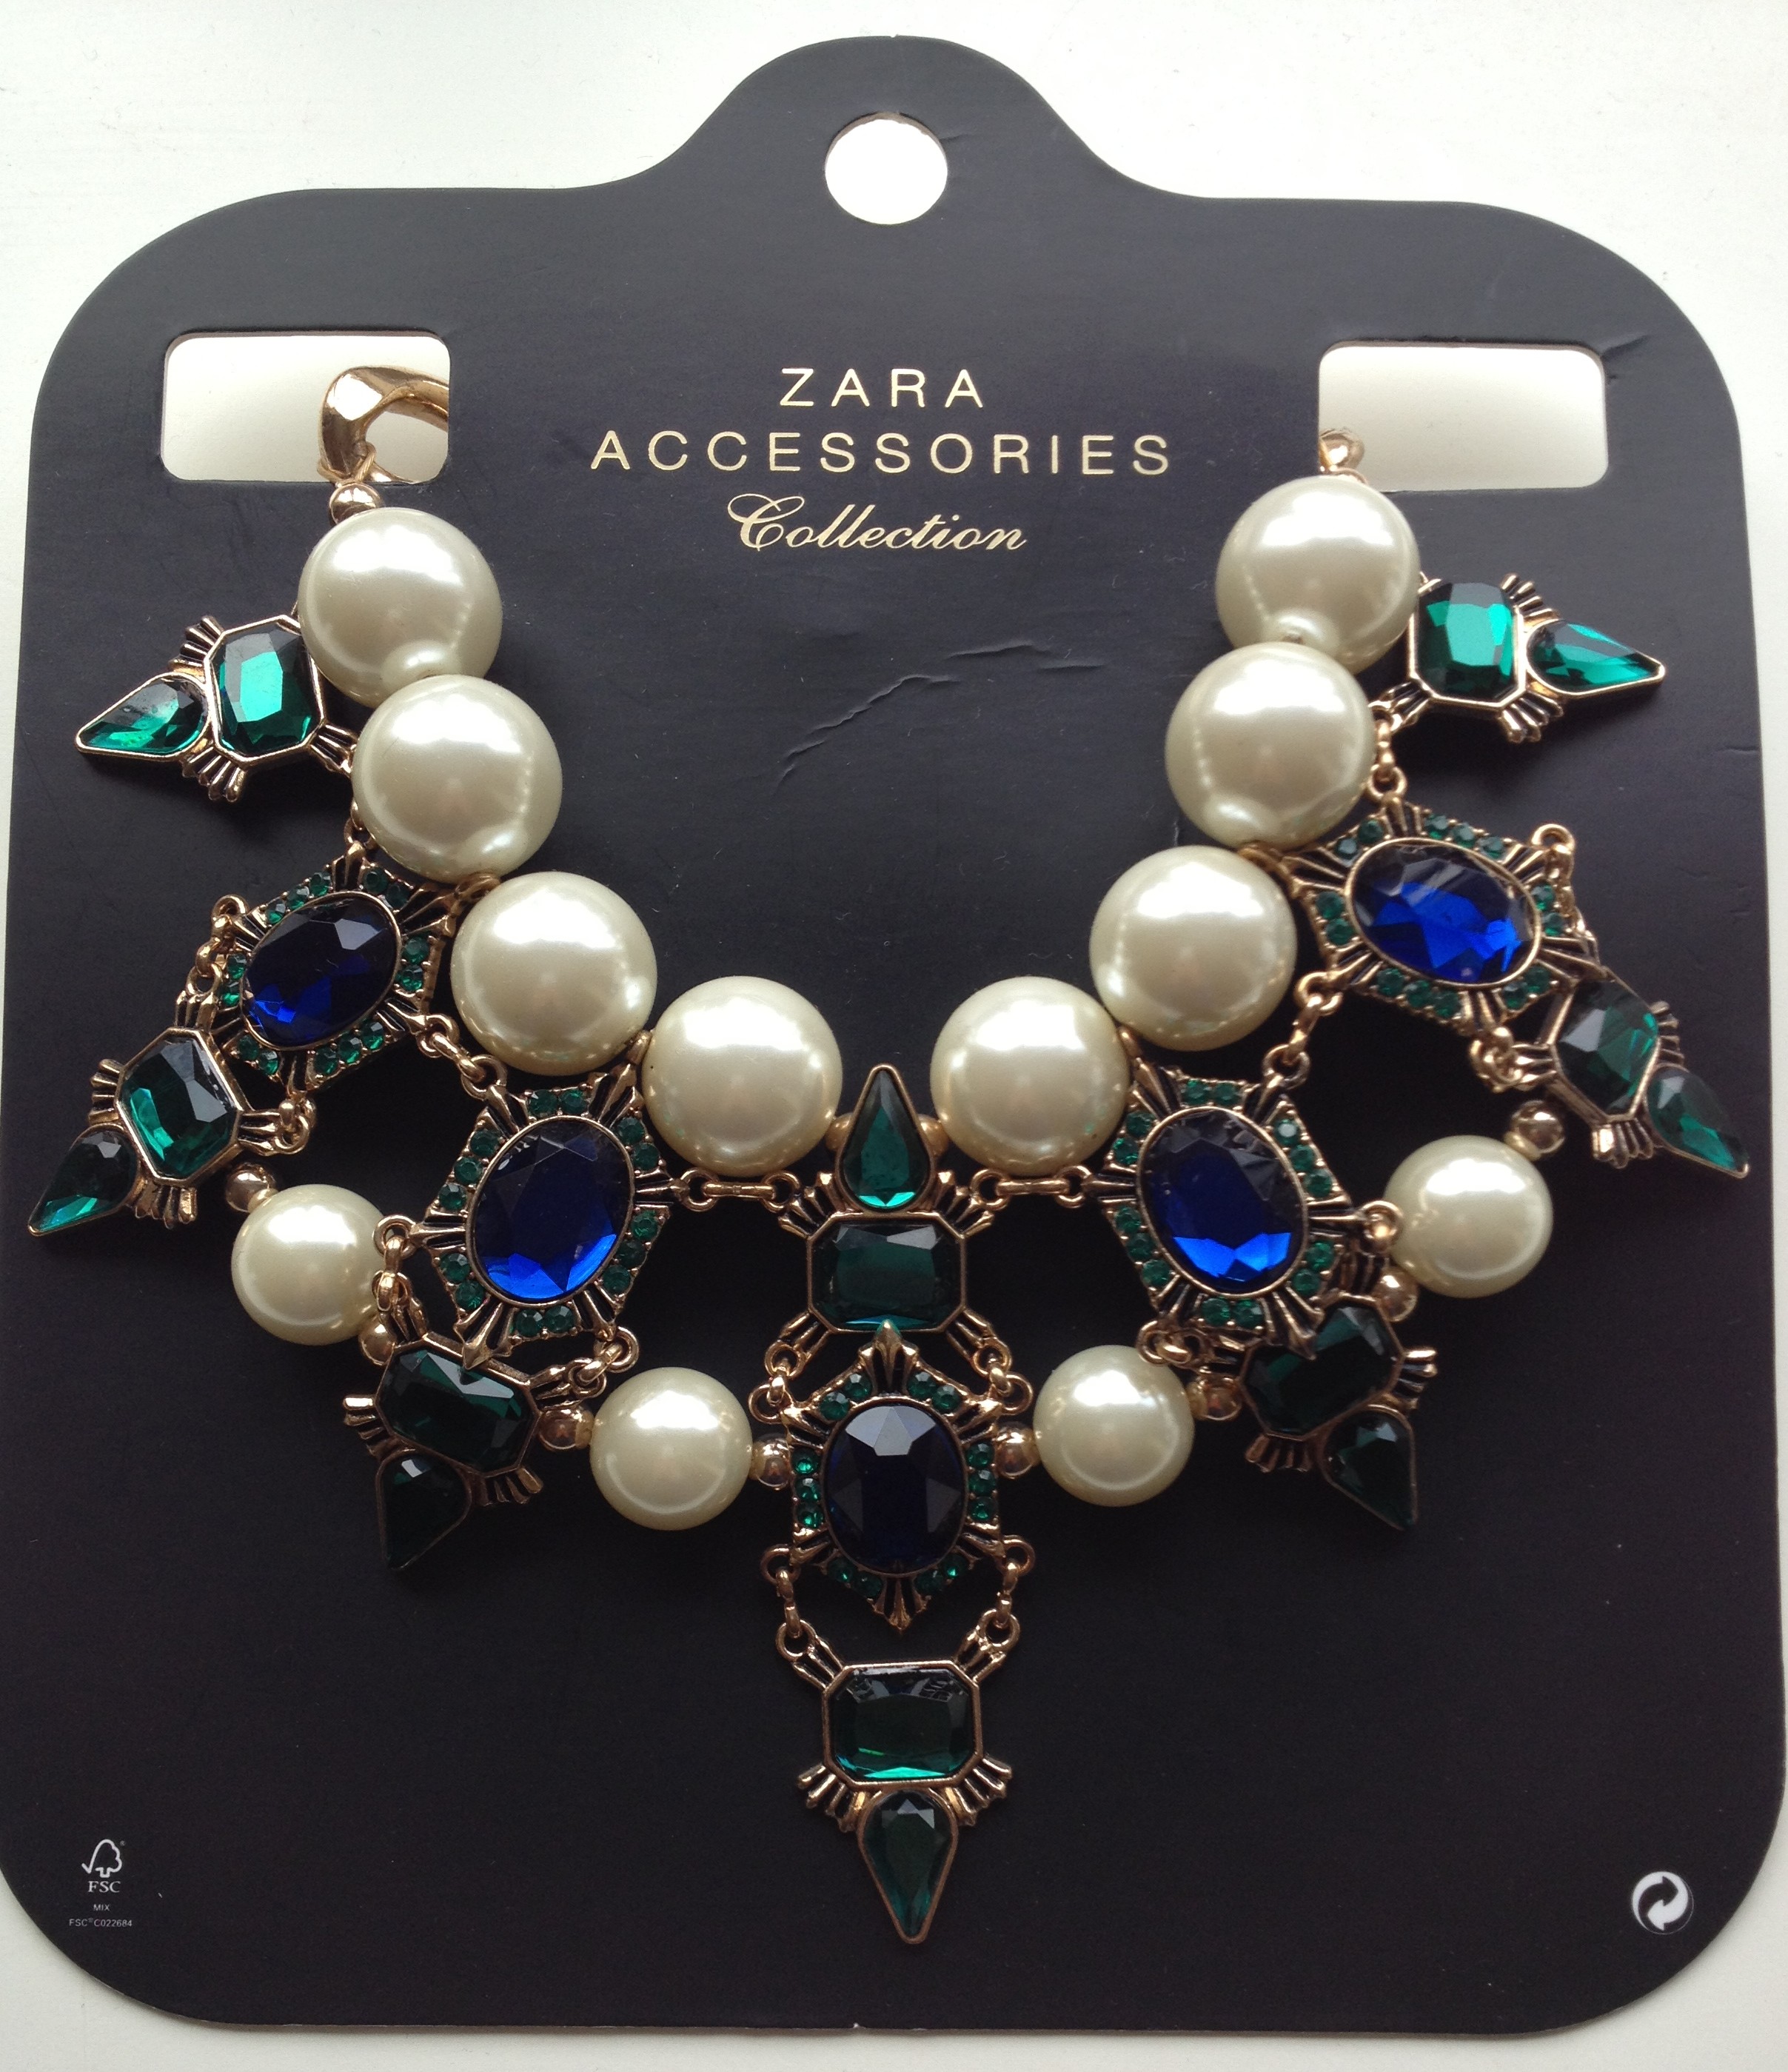 zara jewellery collection